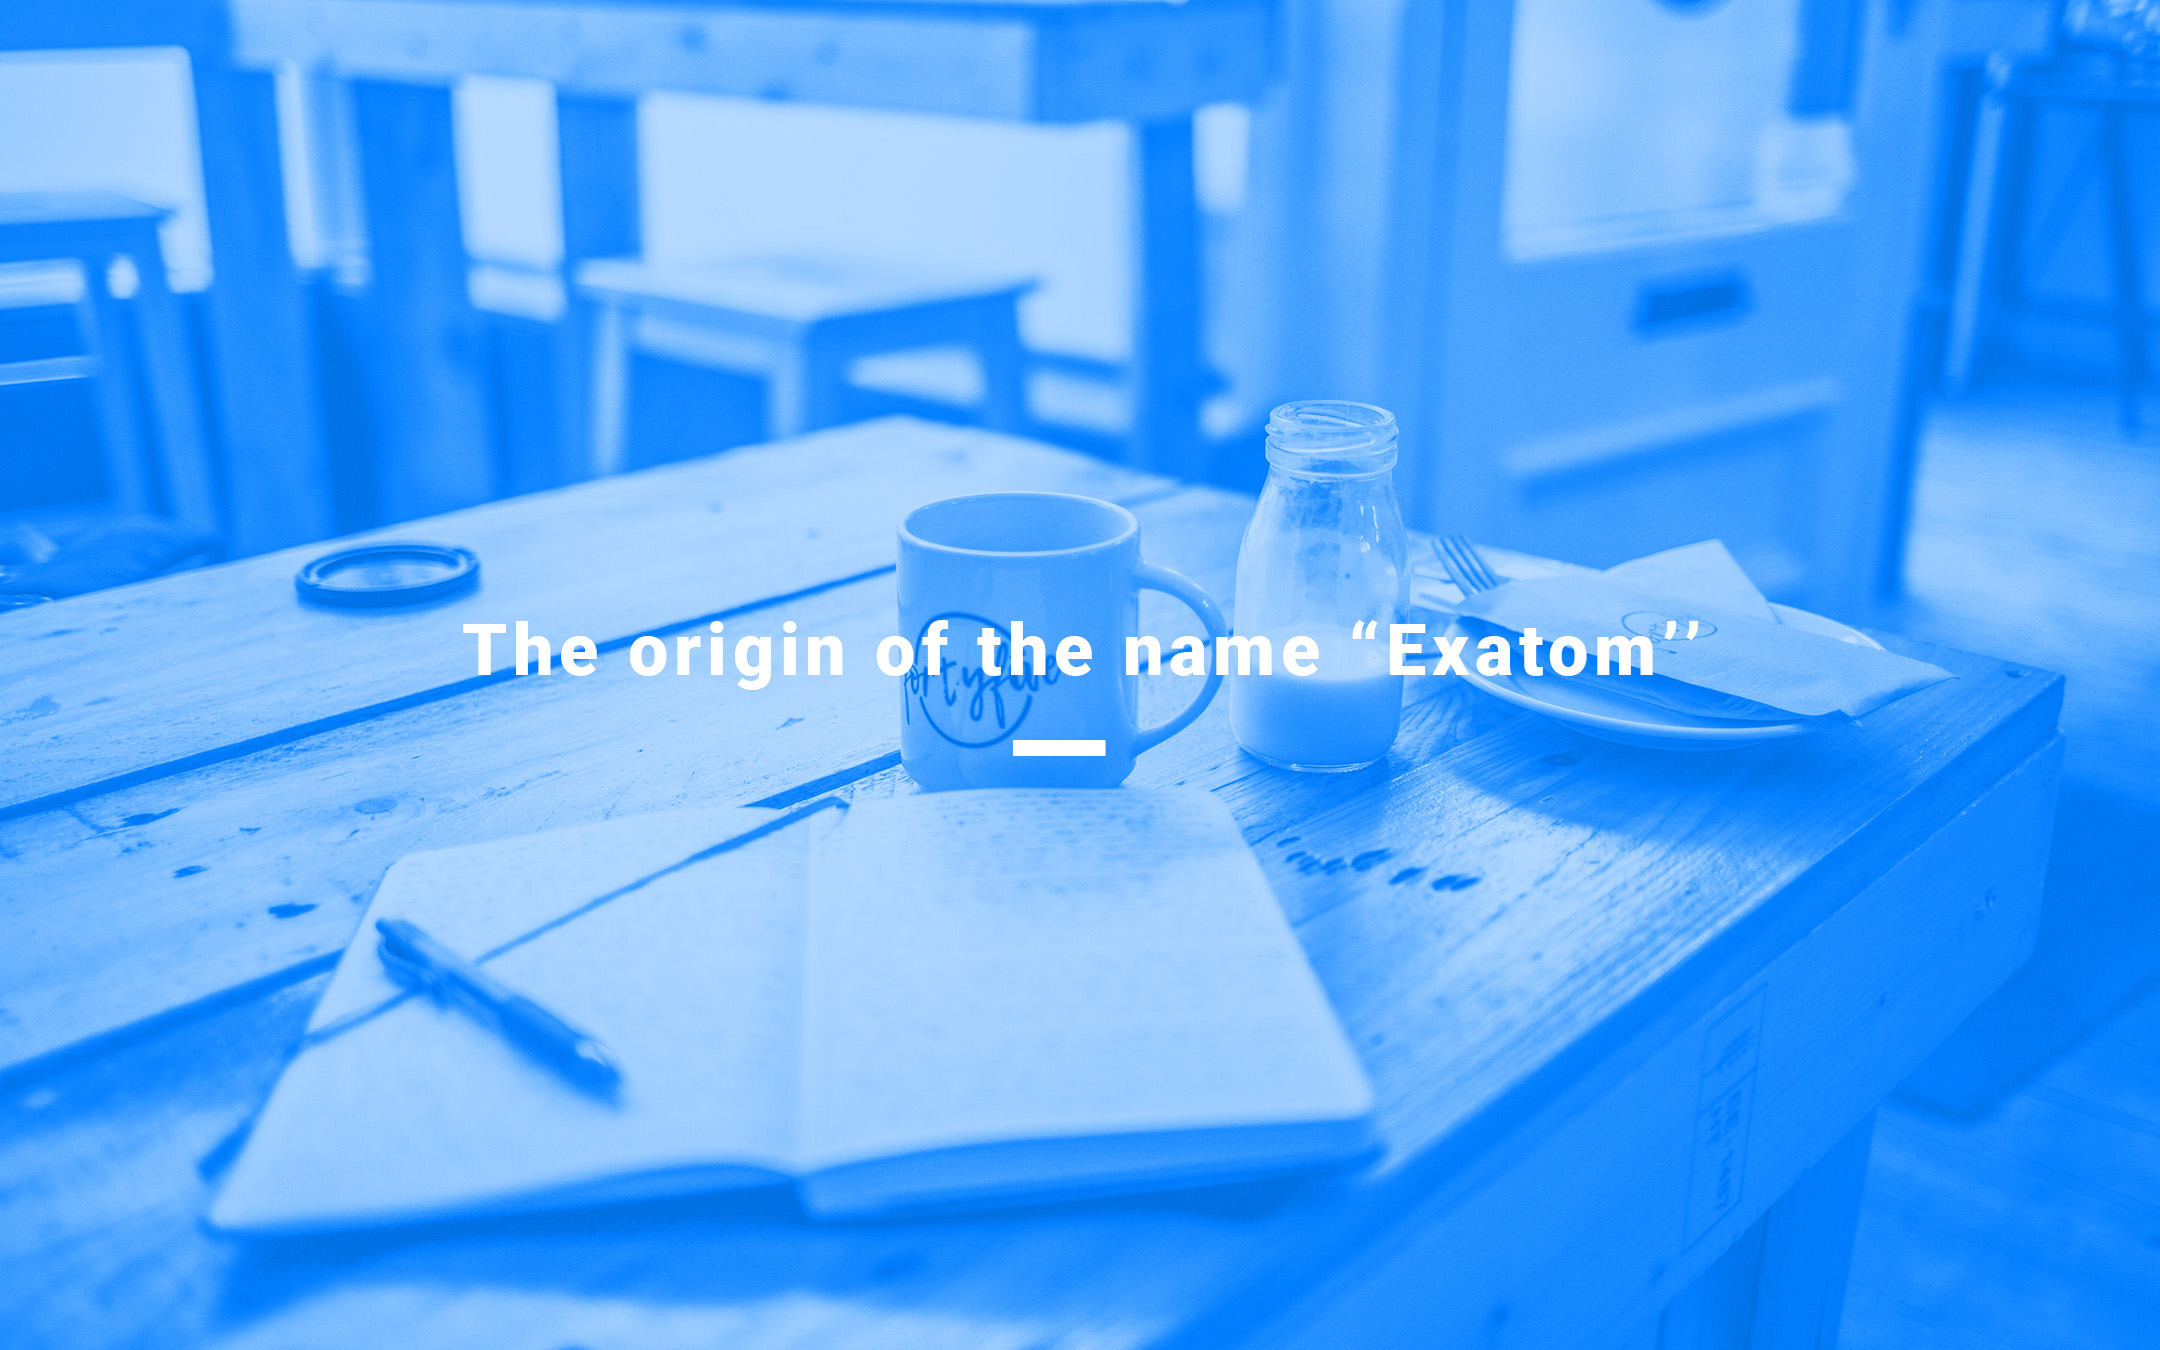 The origin of the name Exatom